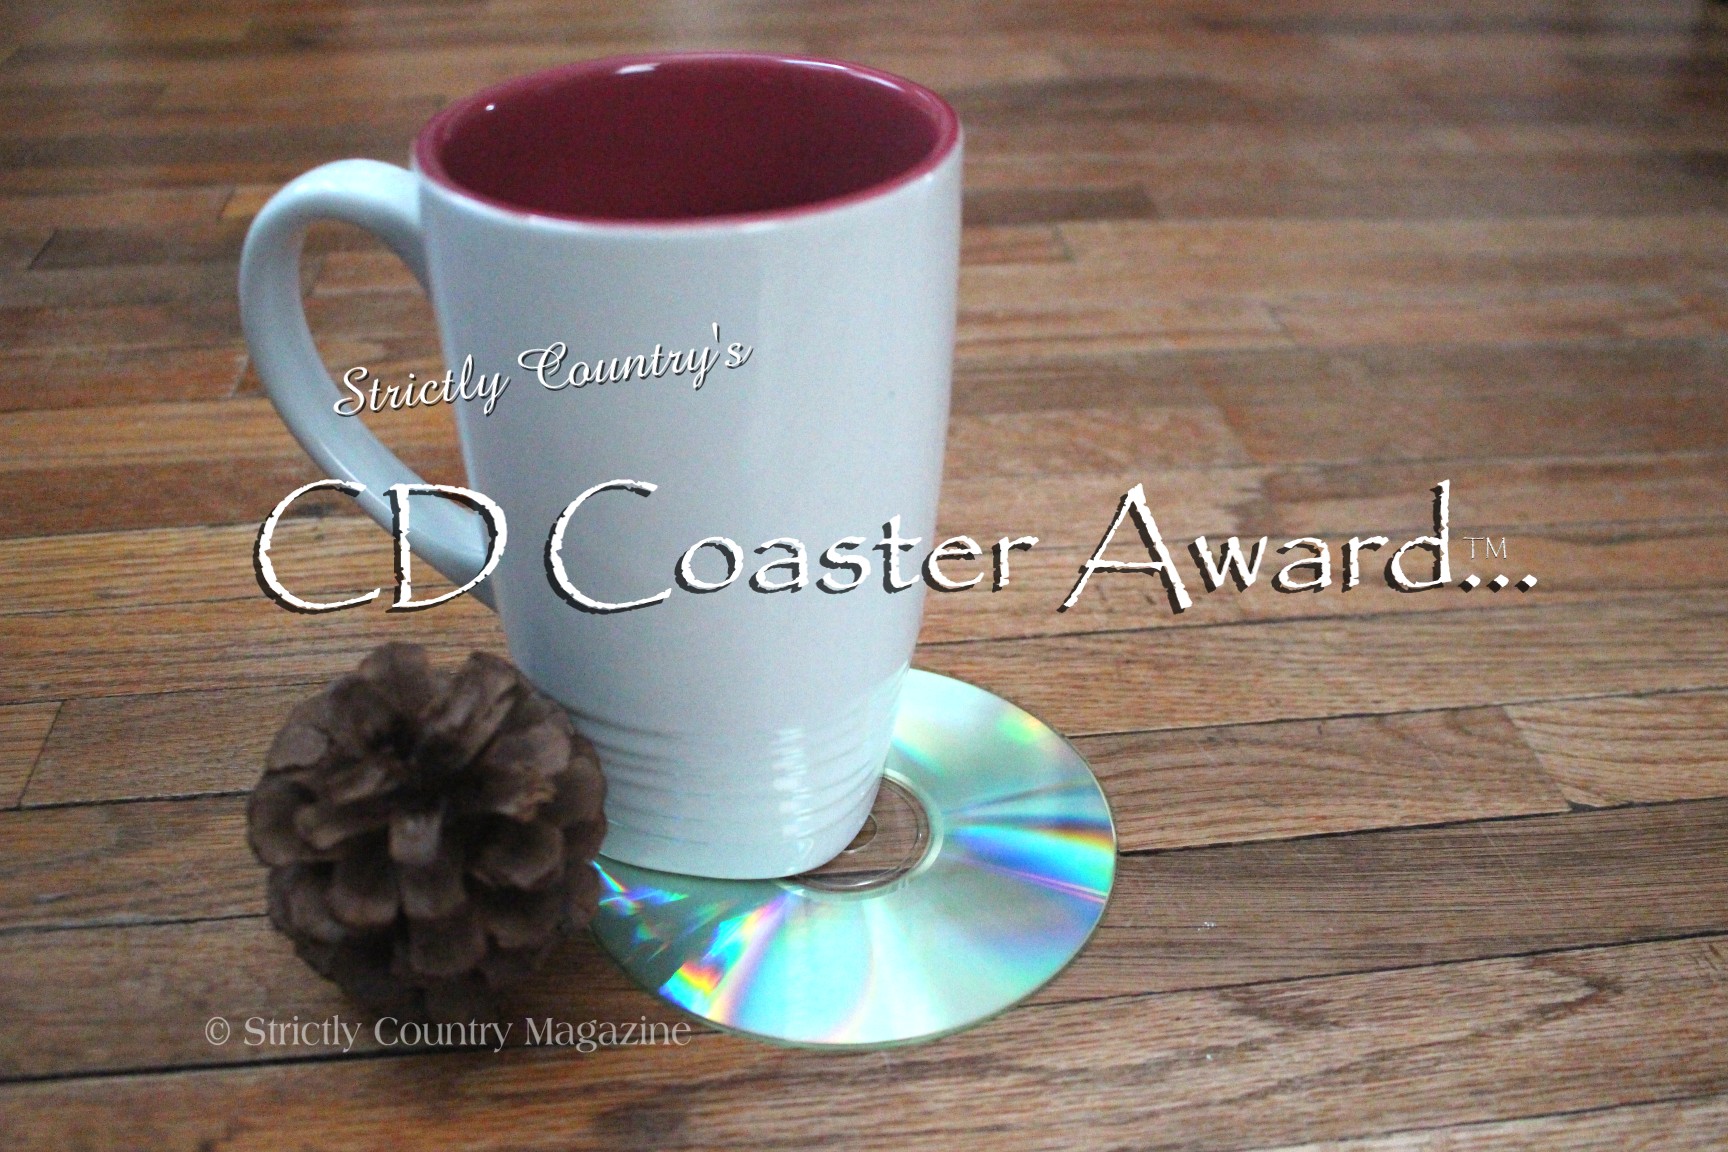 Strictly Country Magazine copyright CD Coaster Award official logo